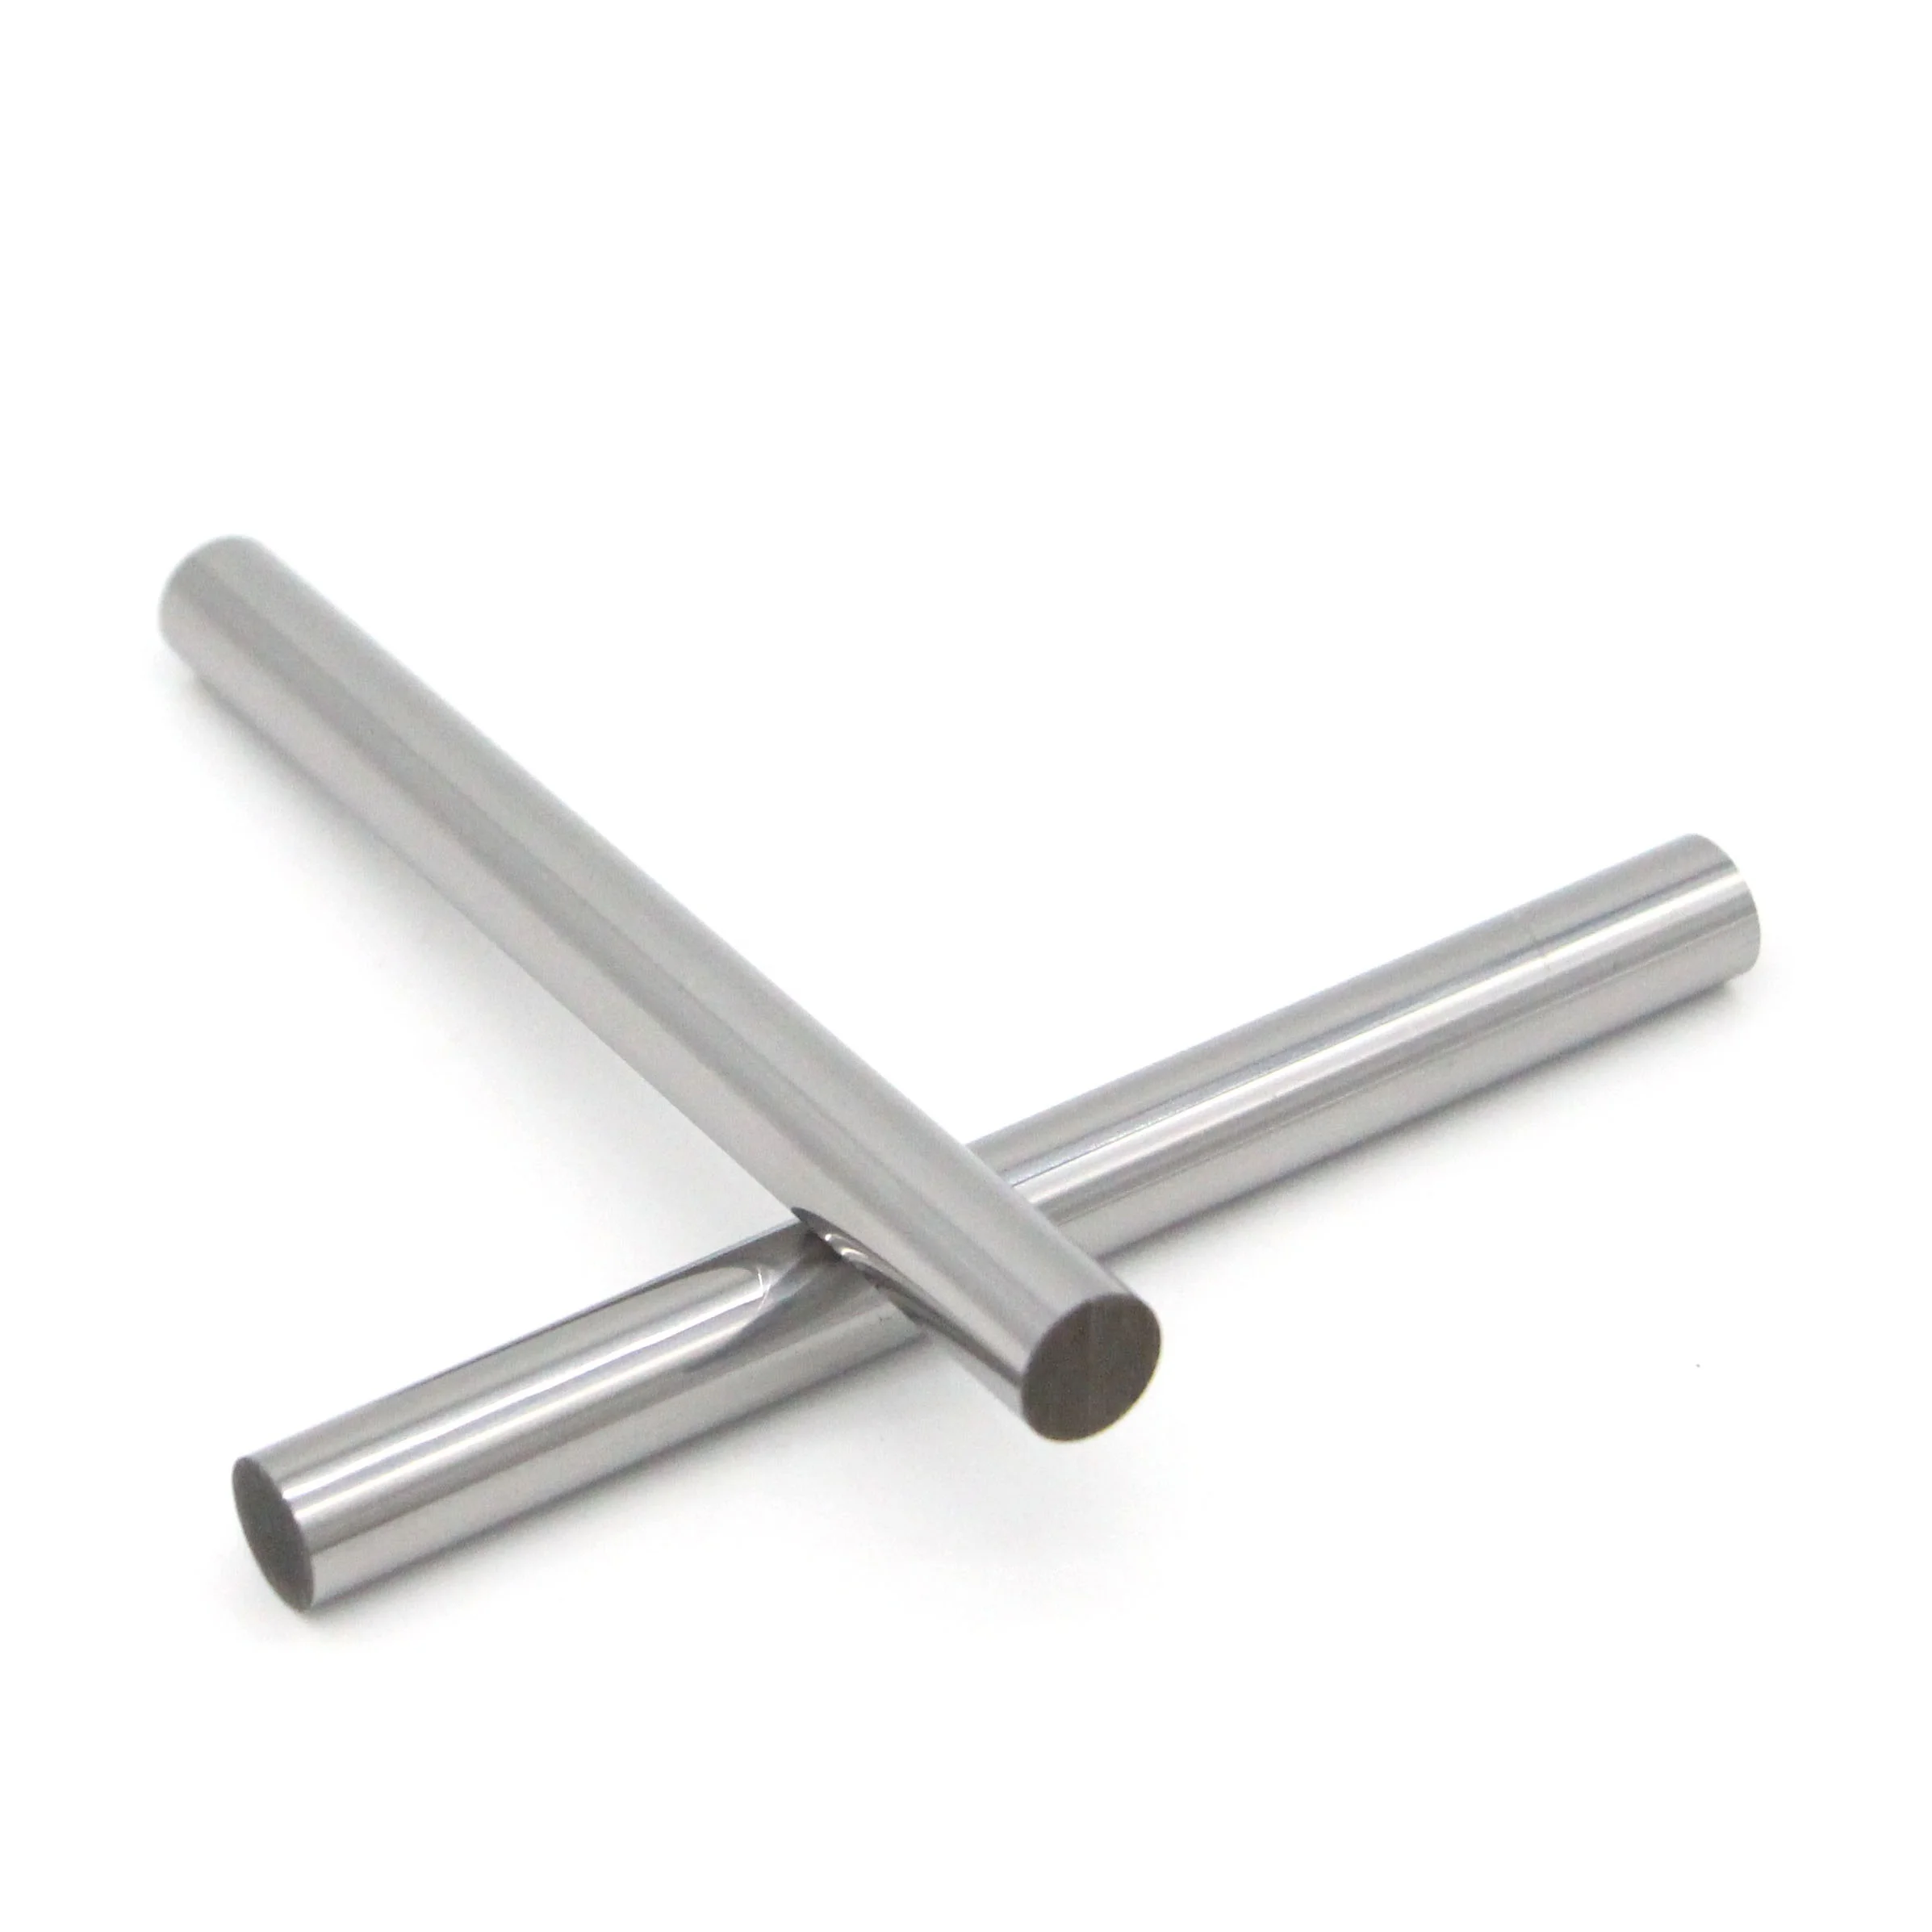 
2mm diameter polished tungsten carbide rod  (62413766632)